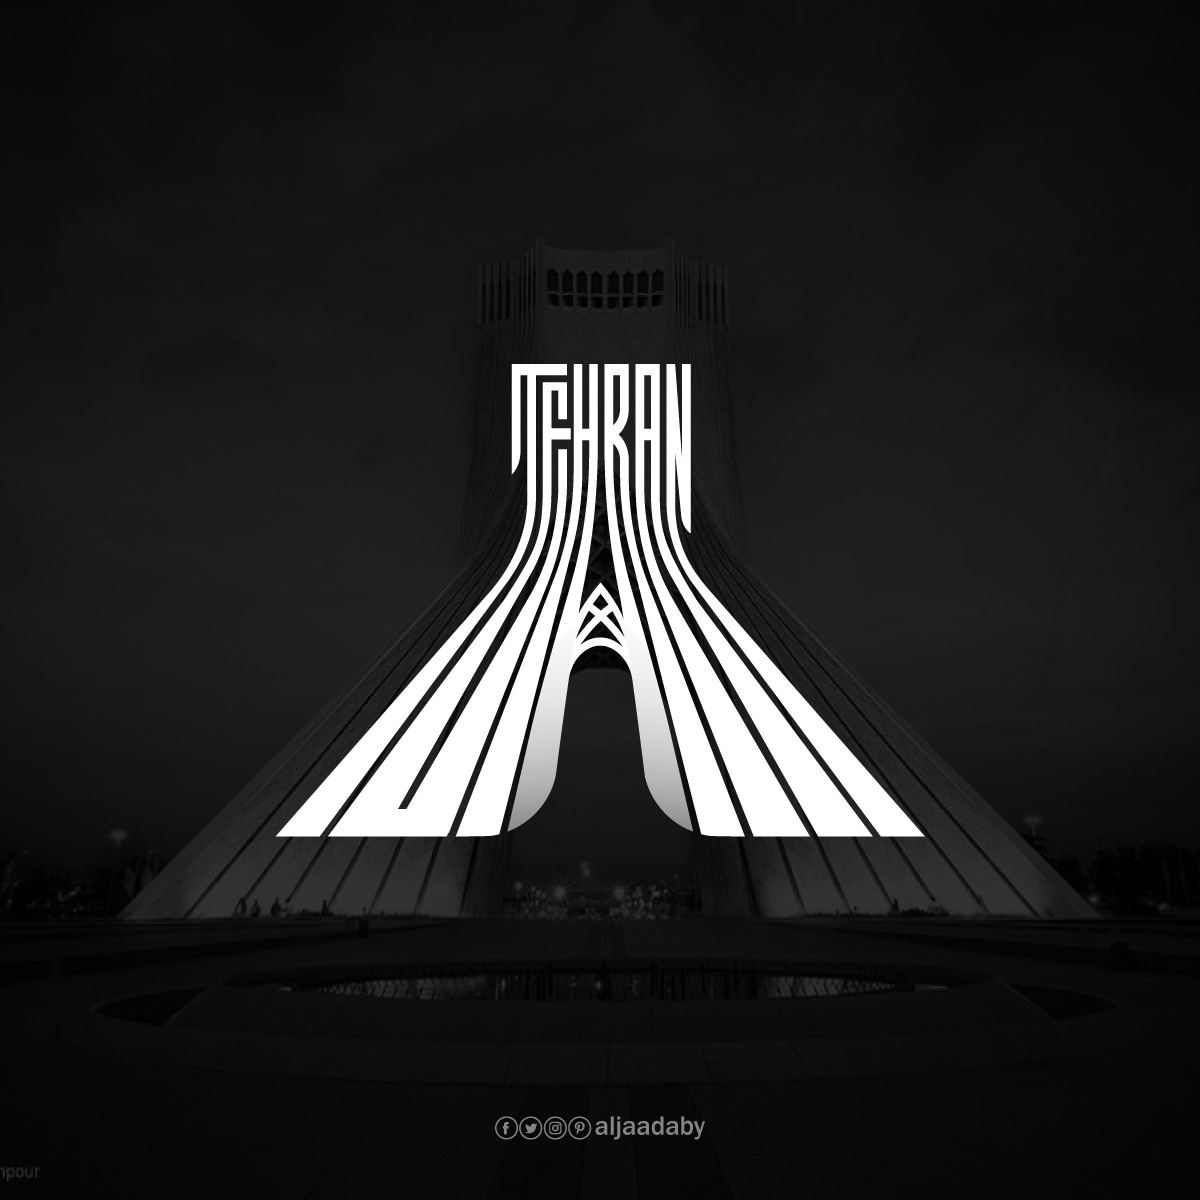 Typographic city logos based on their famous landmarks - Tehran